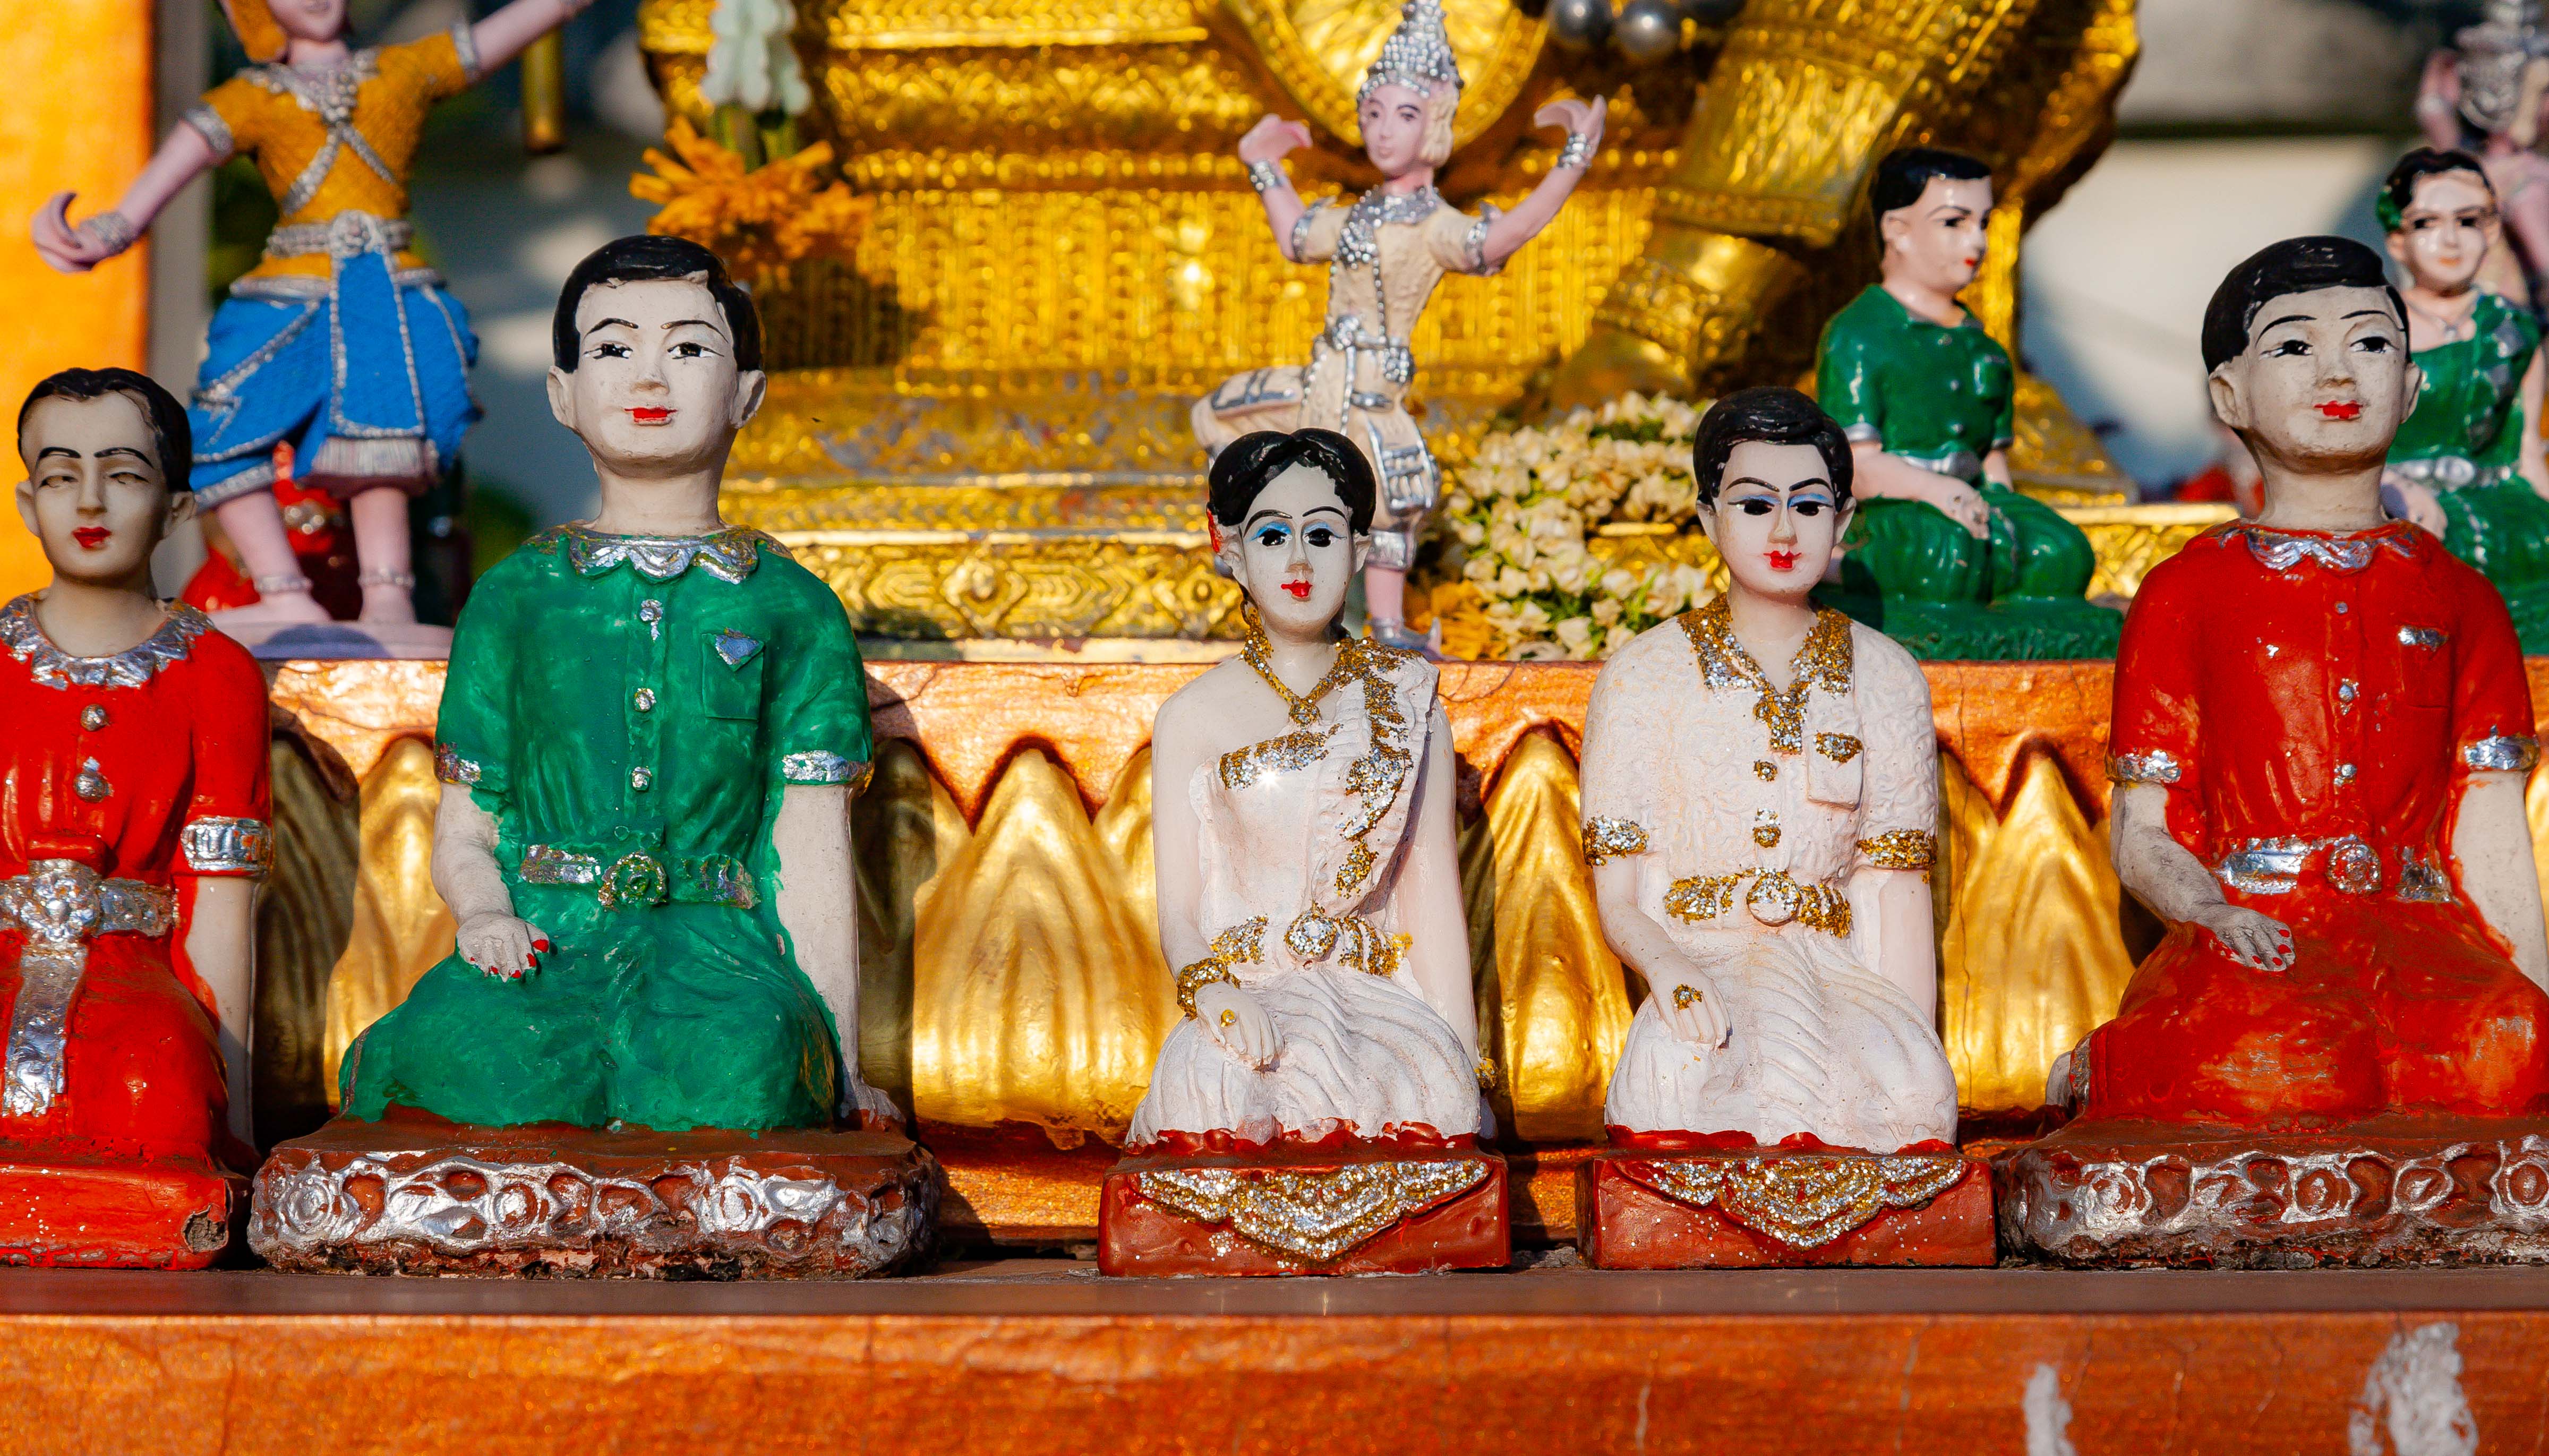 Thailand, Udon Thani Prov, Temple Figurines, 2008, IMG 6229